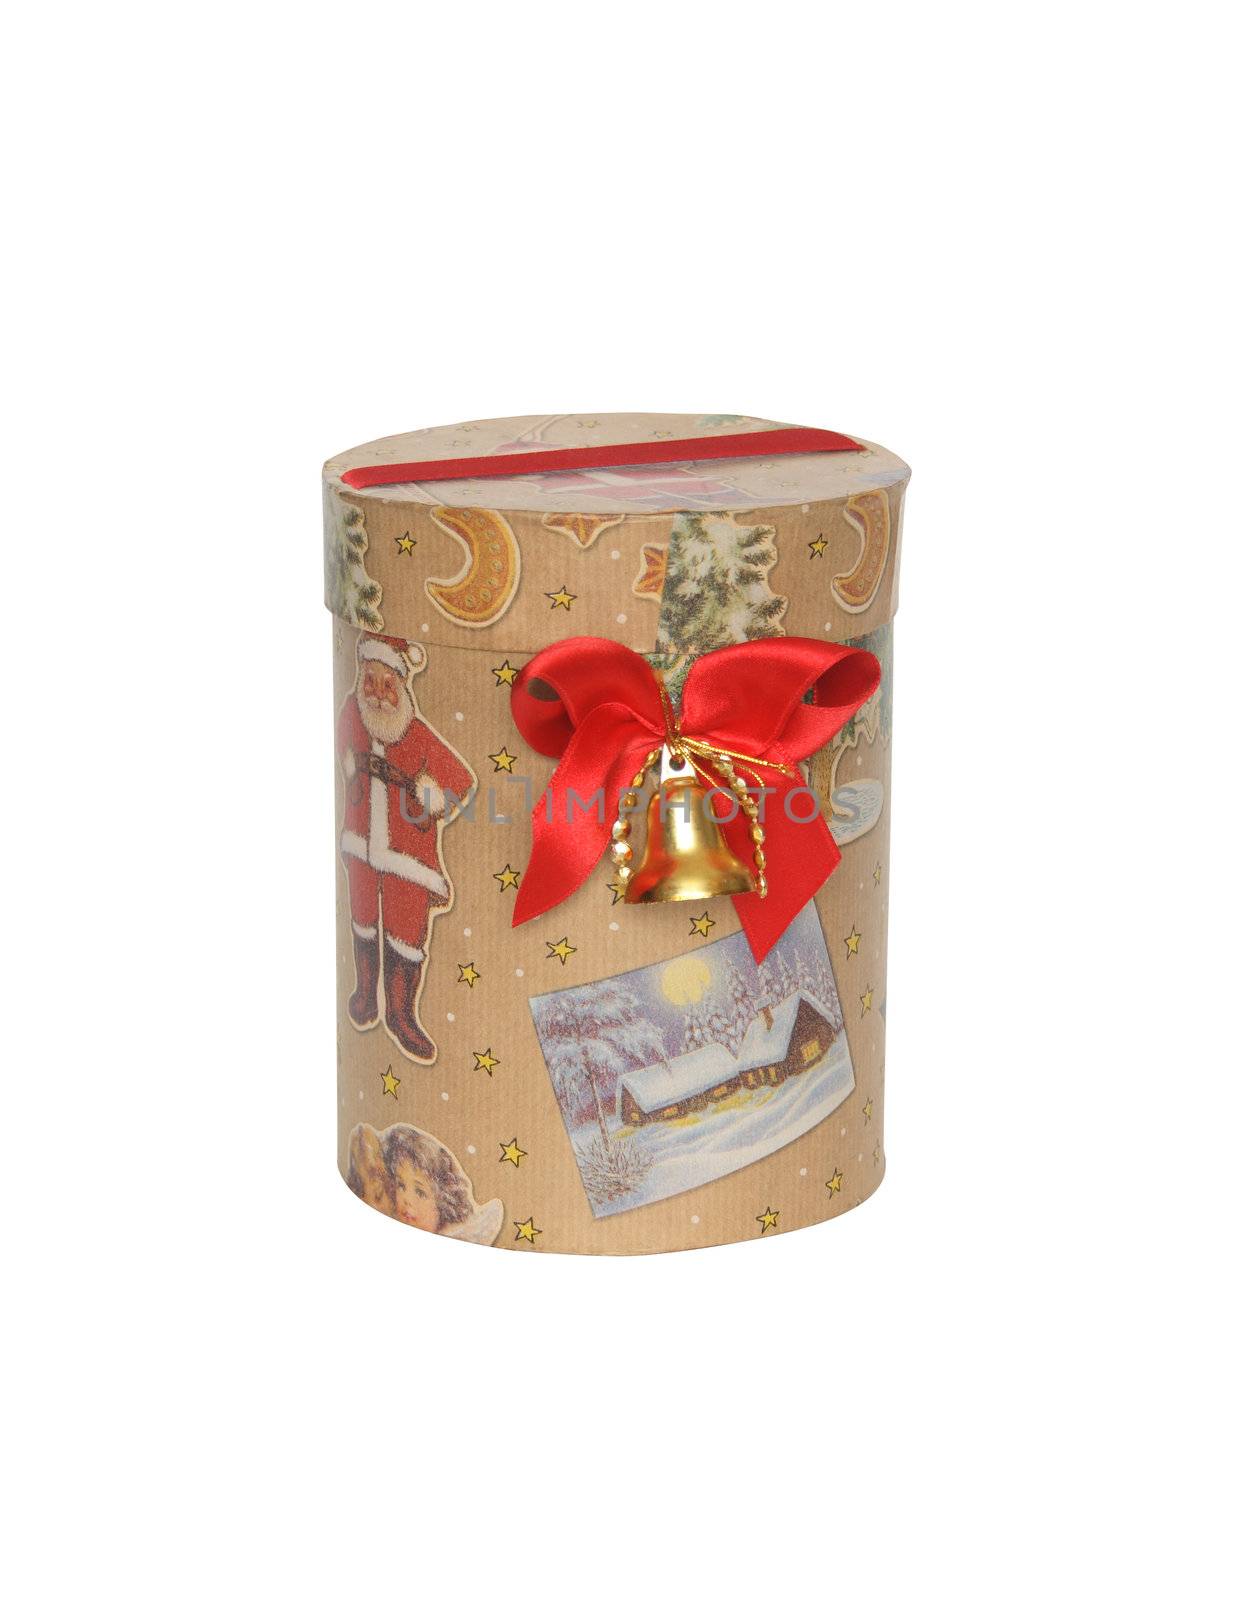 Vintage Christmas Gift Box by kvkirillov